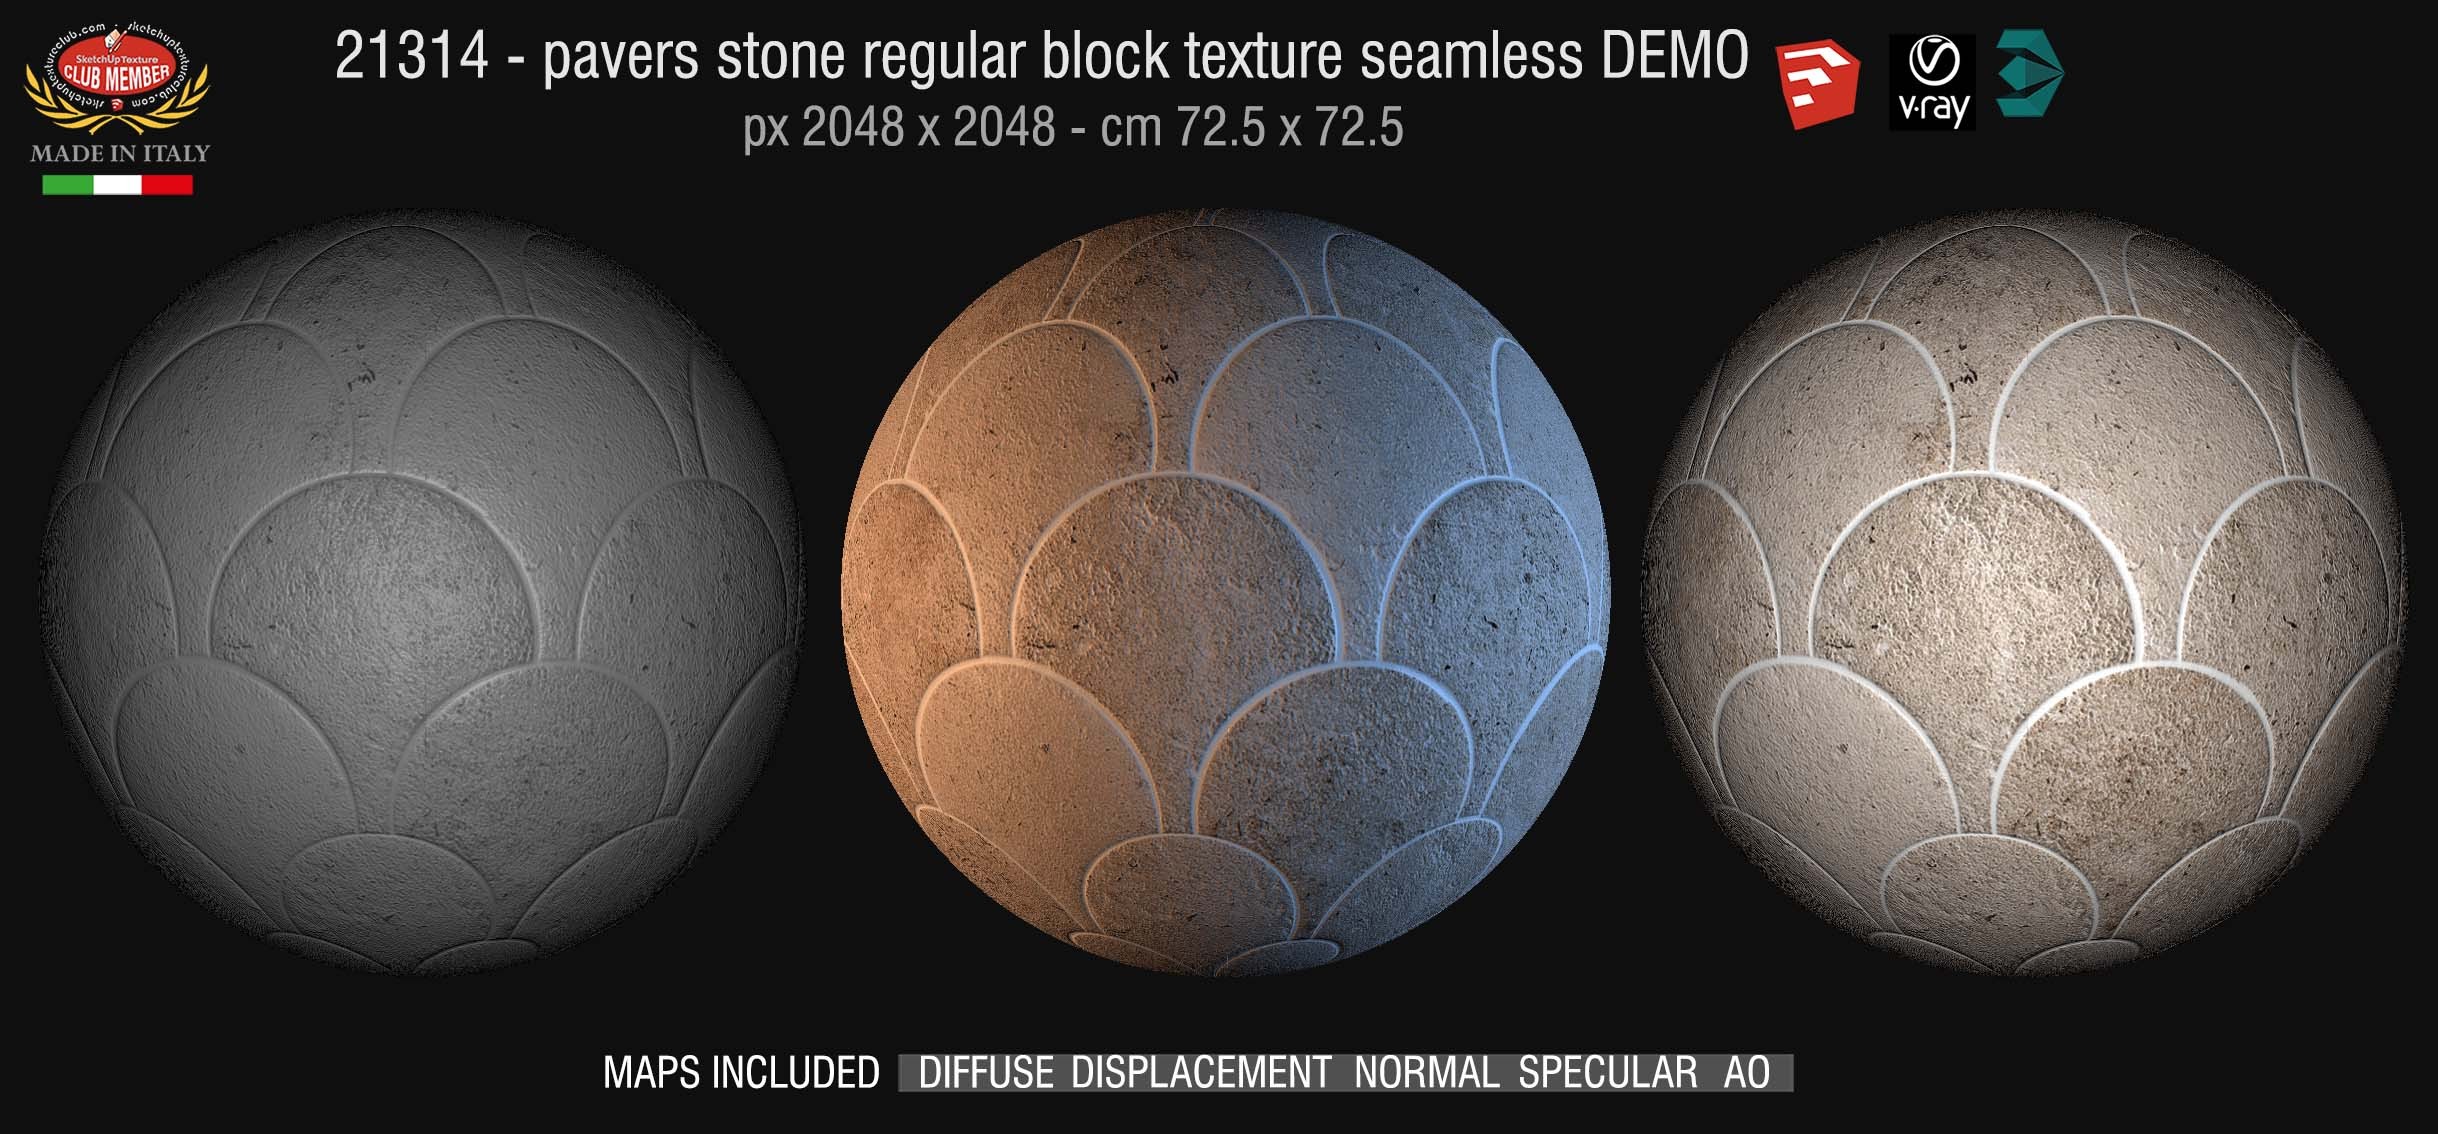 21314  HR Pavers stone regular block texture seamless + maps DEMO